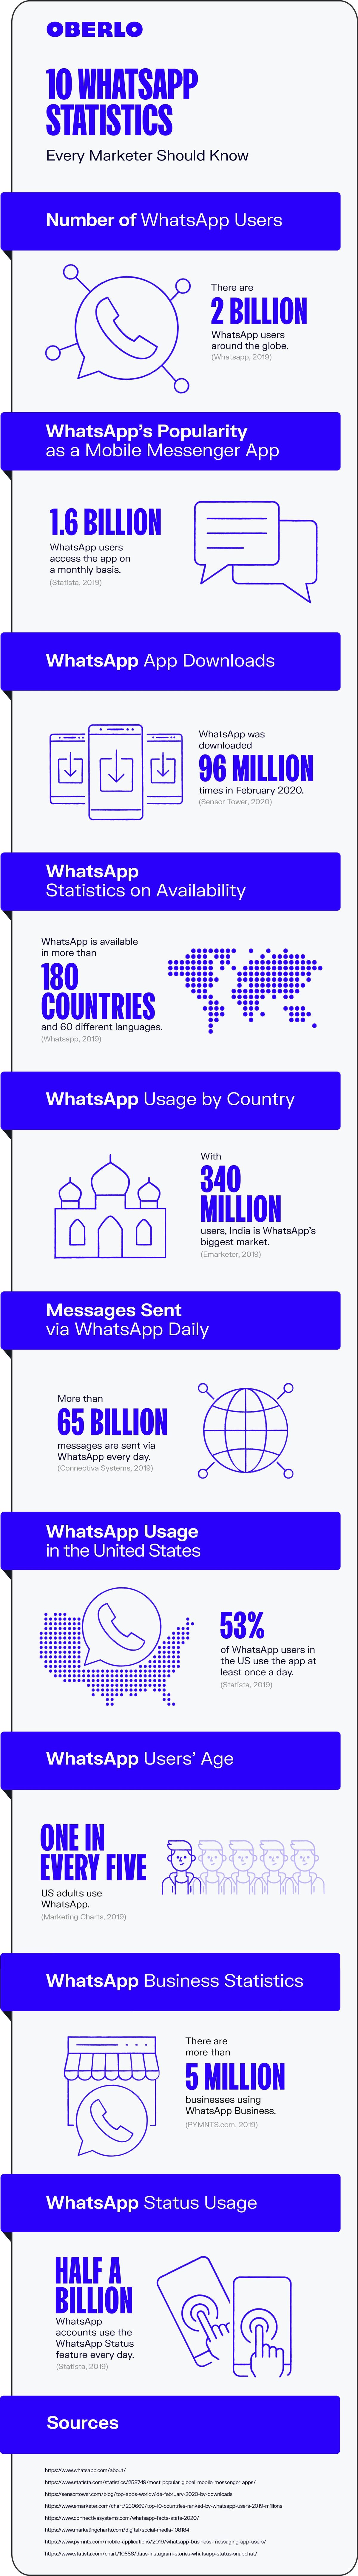 Statistici WhatsApp 2020